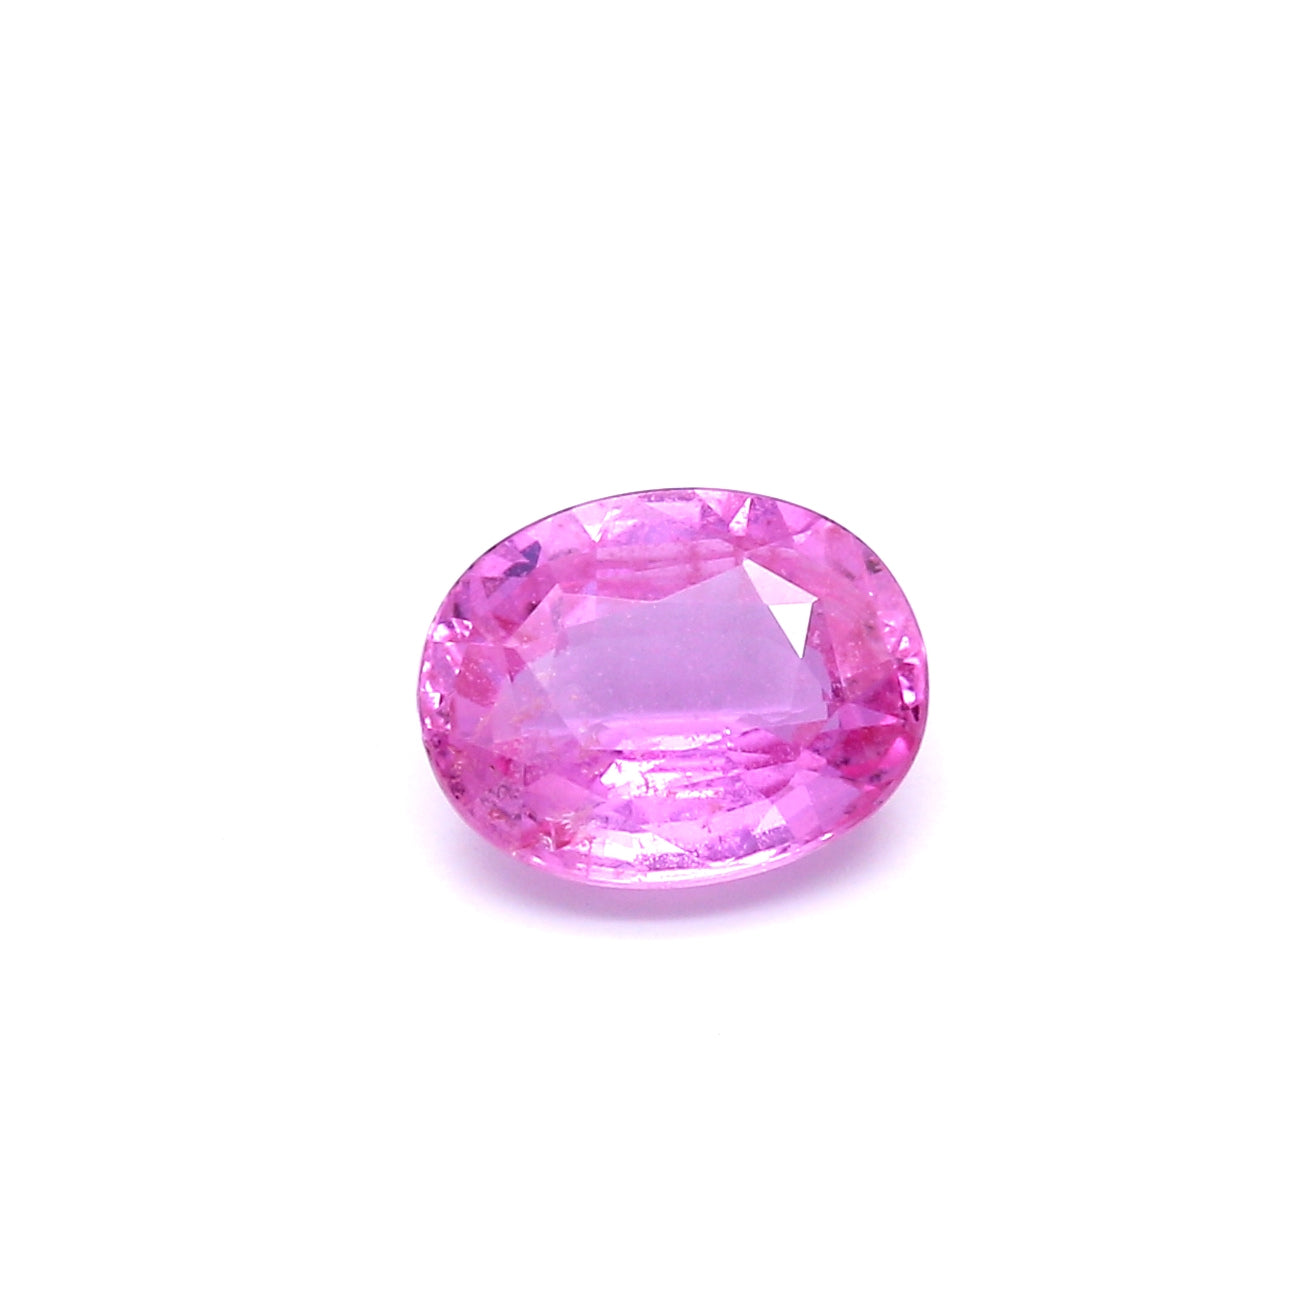 2.31ct Pink, Oval Sapphire, Heated, Madagascar - 8.90 x 7.00 x 3.97mm